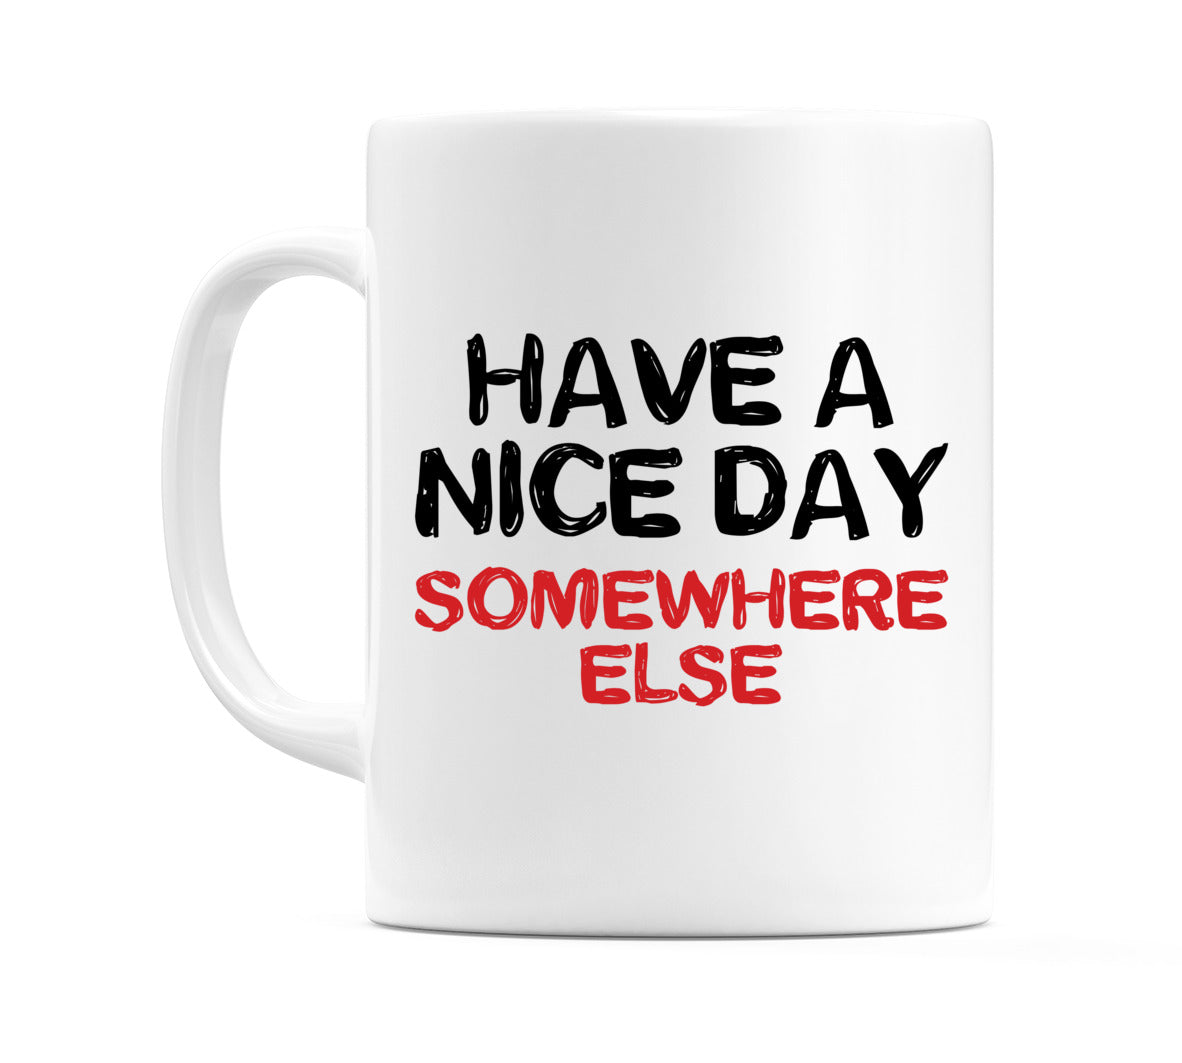 Have a Nice Day Somewhere Else Mug